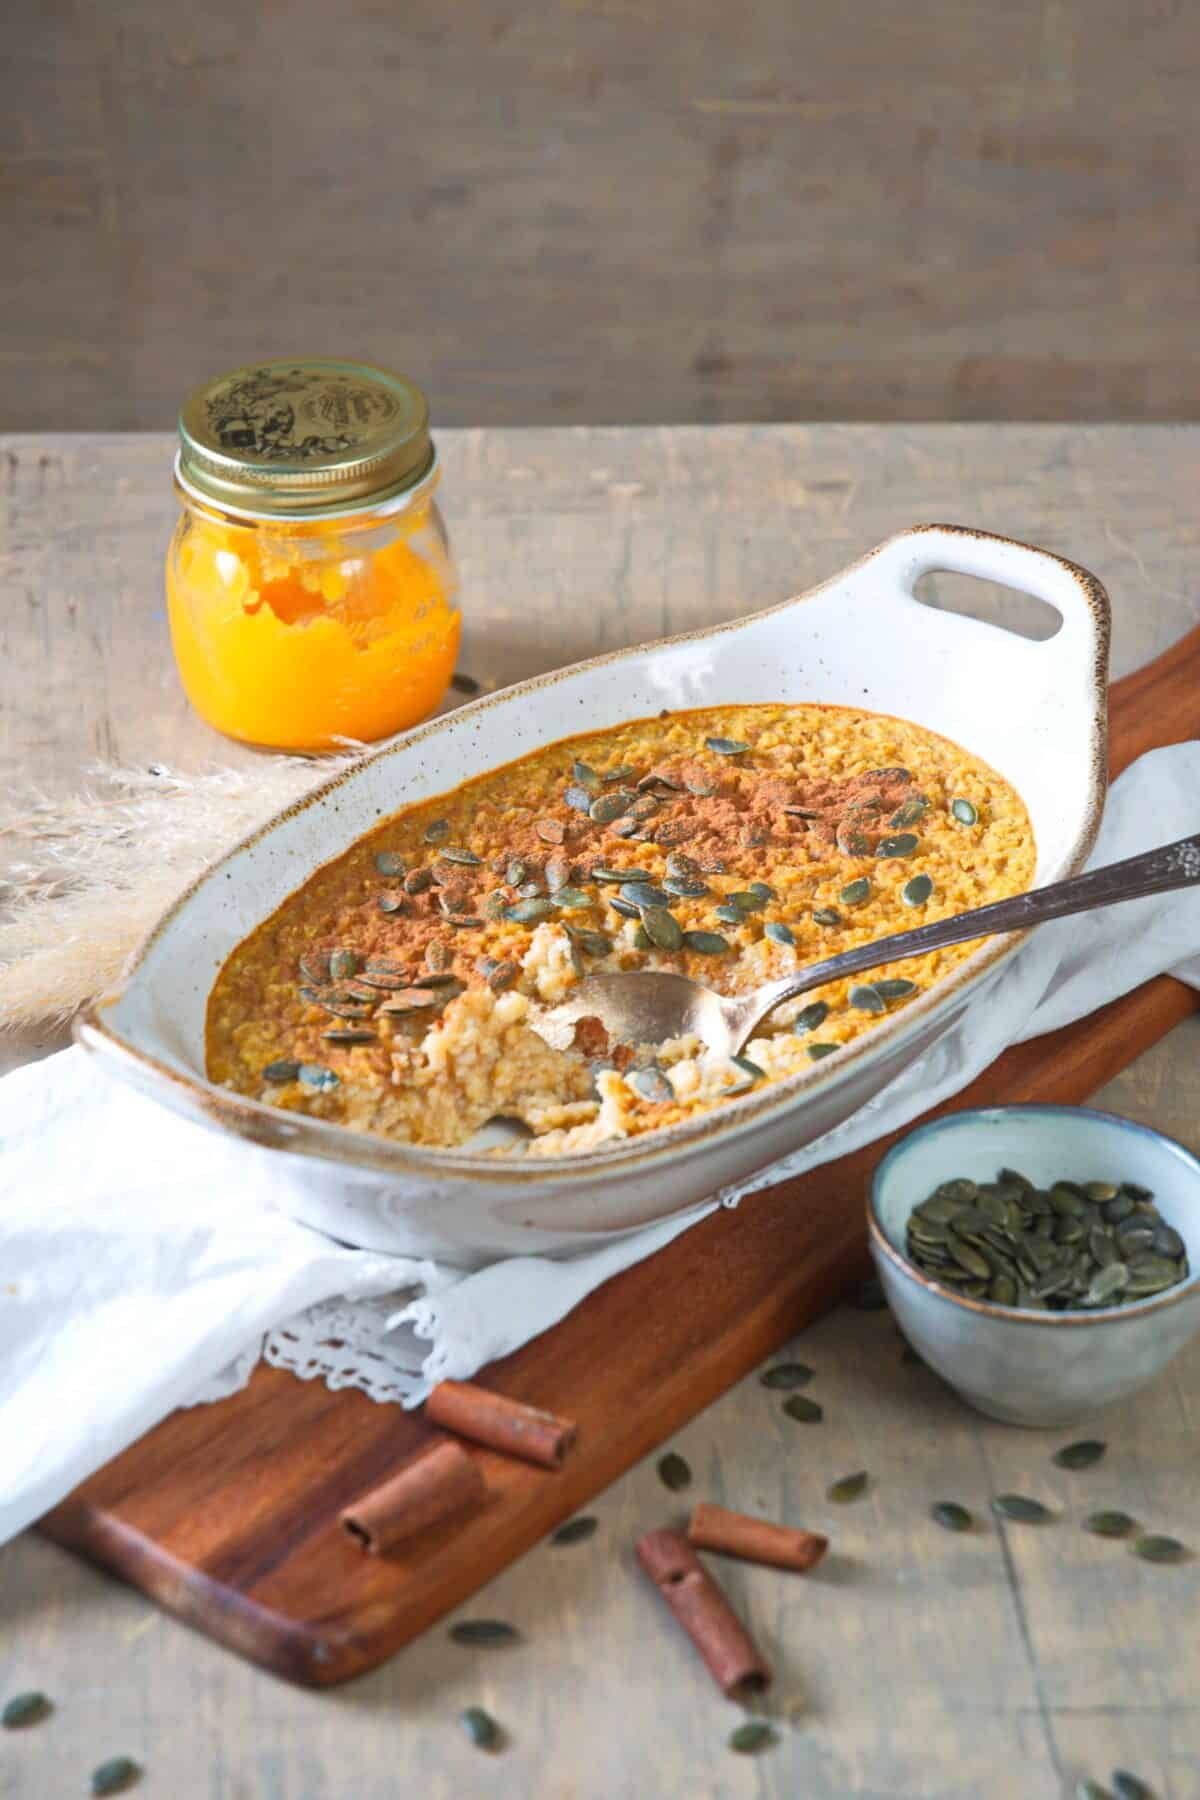 Pumpkin spice oatmeal in a white casserole dish on wooden cutting board.